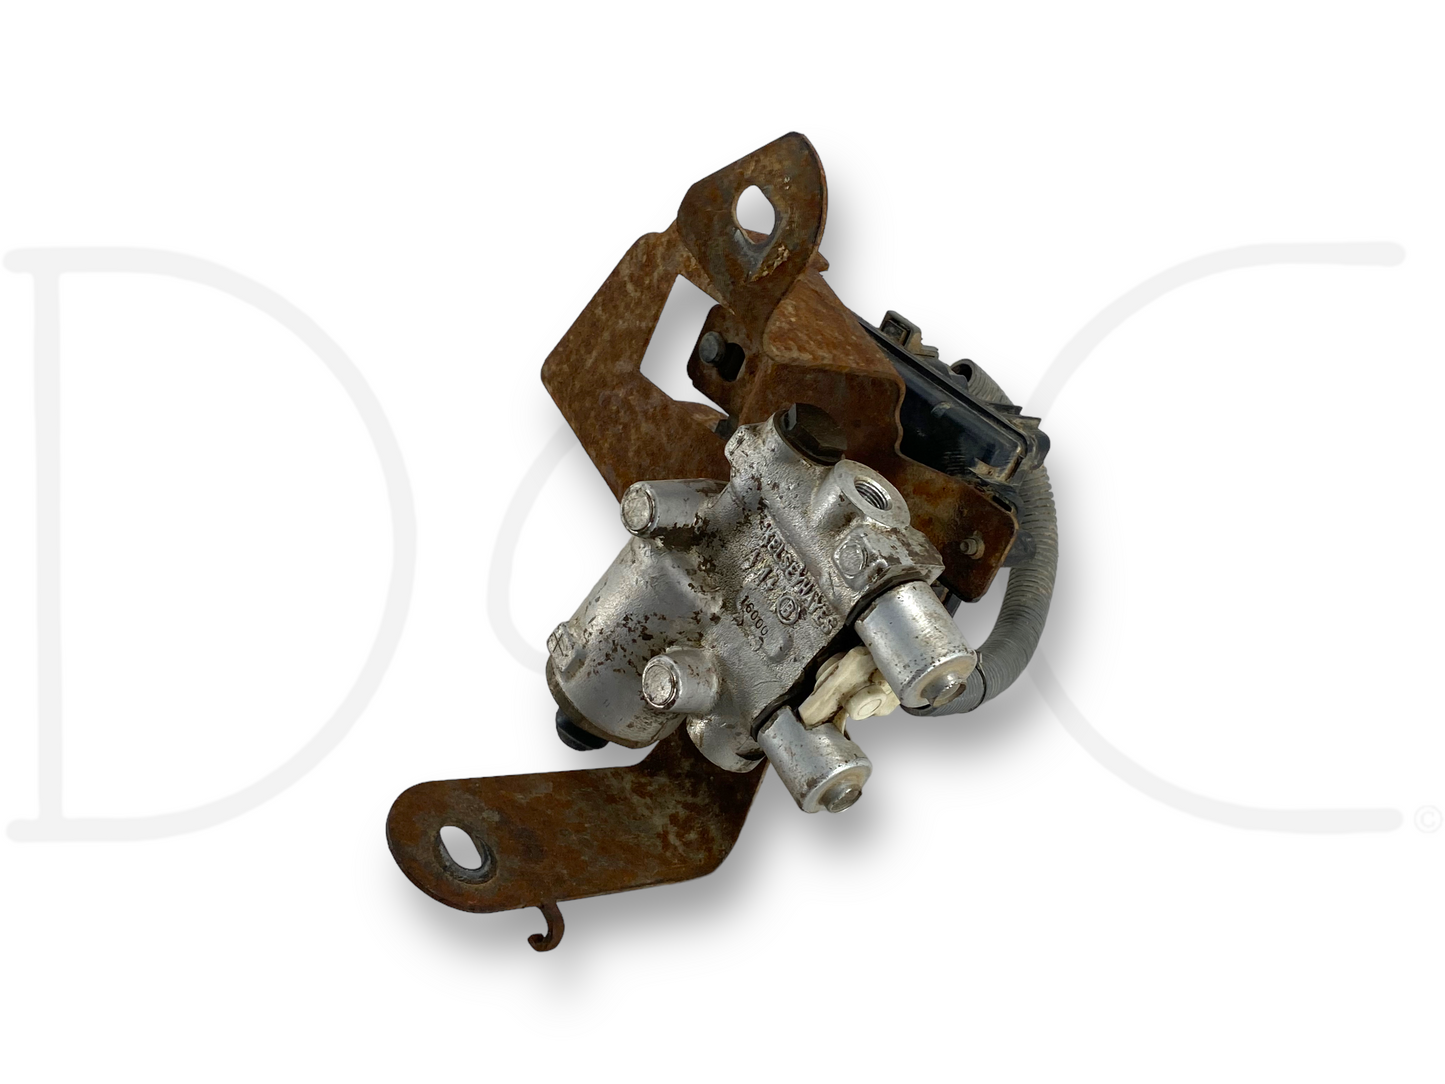 99-00 Ford F250 F350 Brake ABS Module Anti Lock Brake Pump OE F81F-2C018-AH